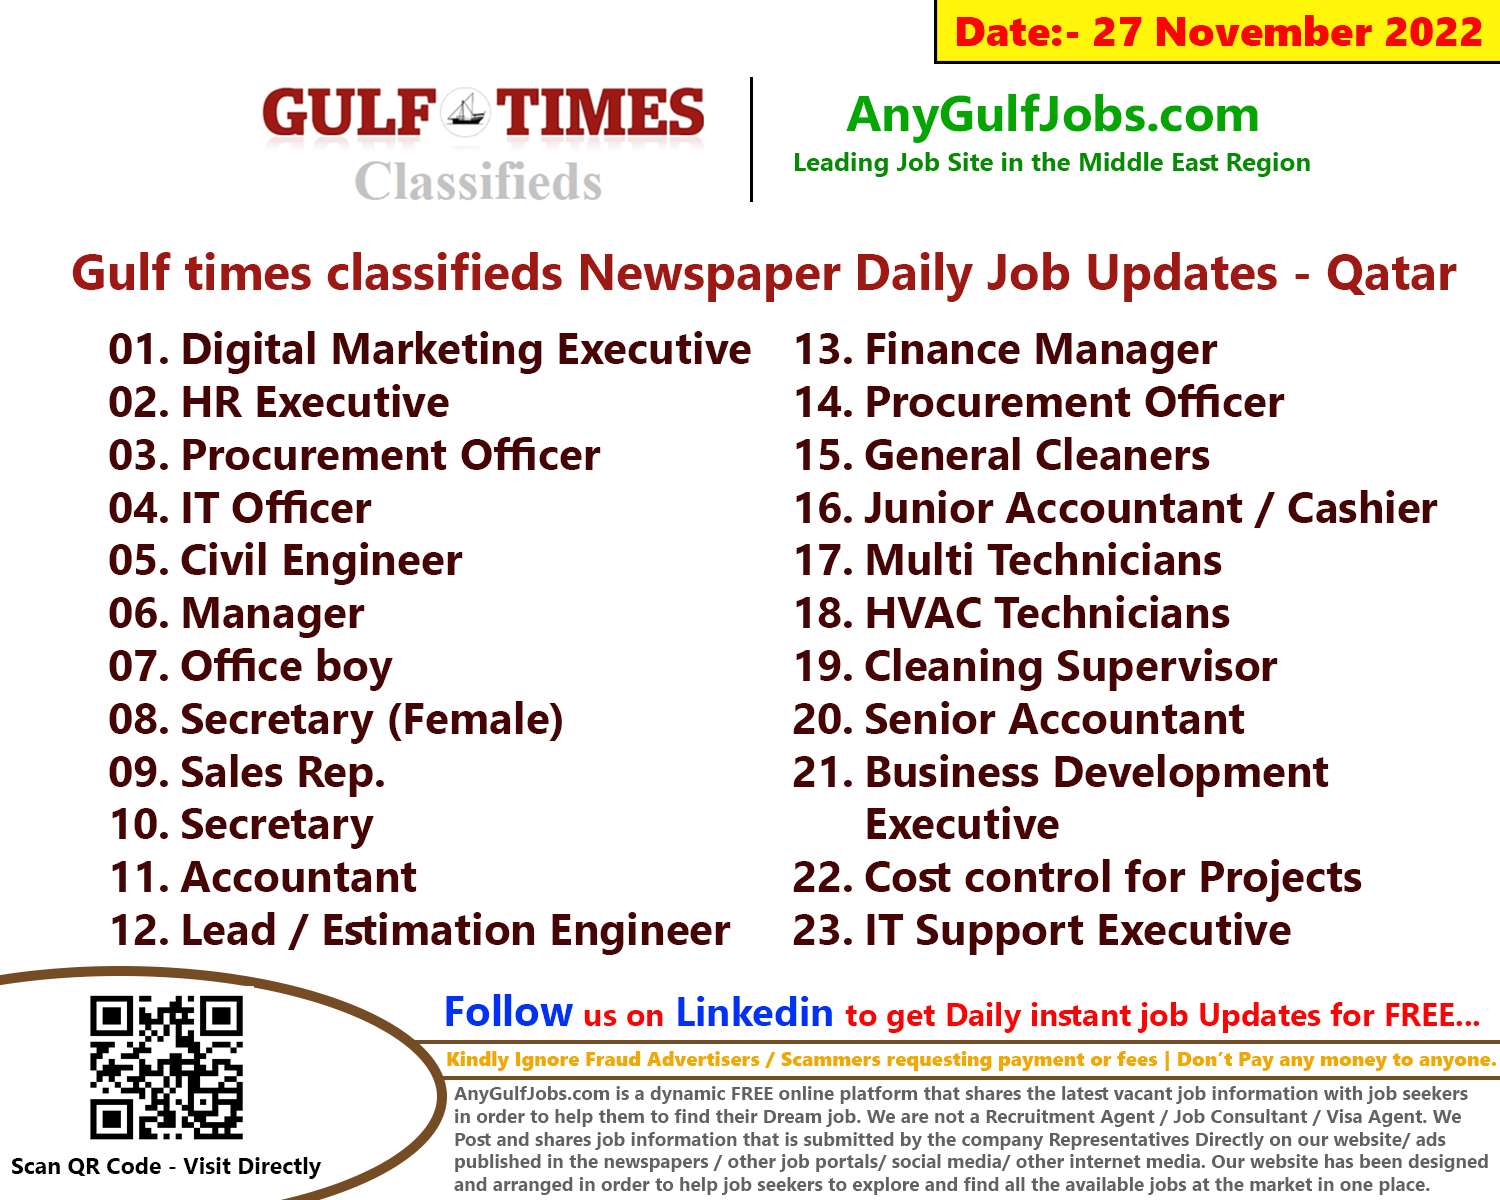 Gulf times classifieds Job Vacancies Qatar - 27 November 2022